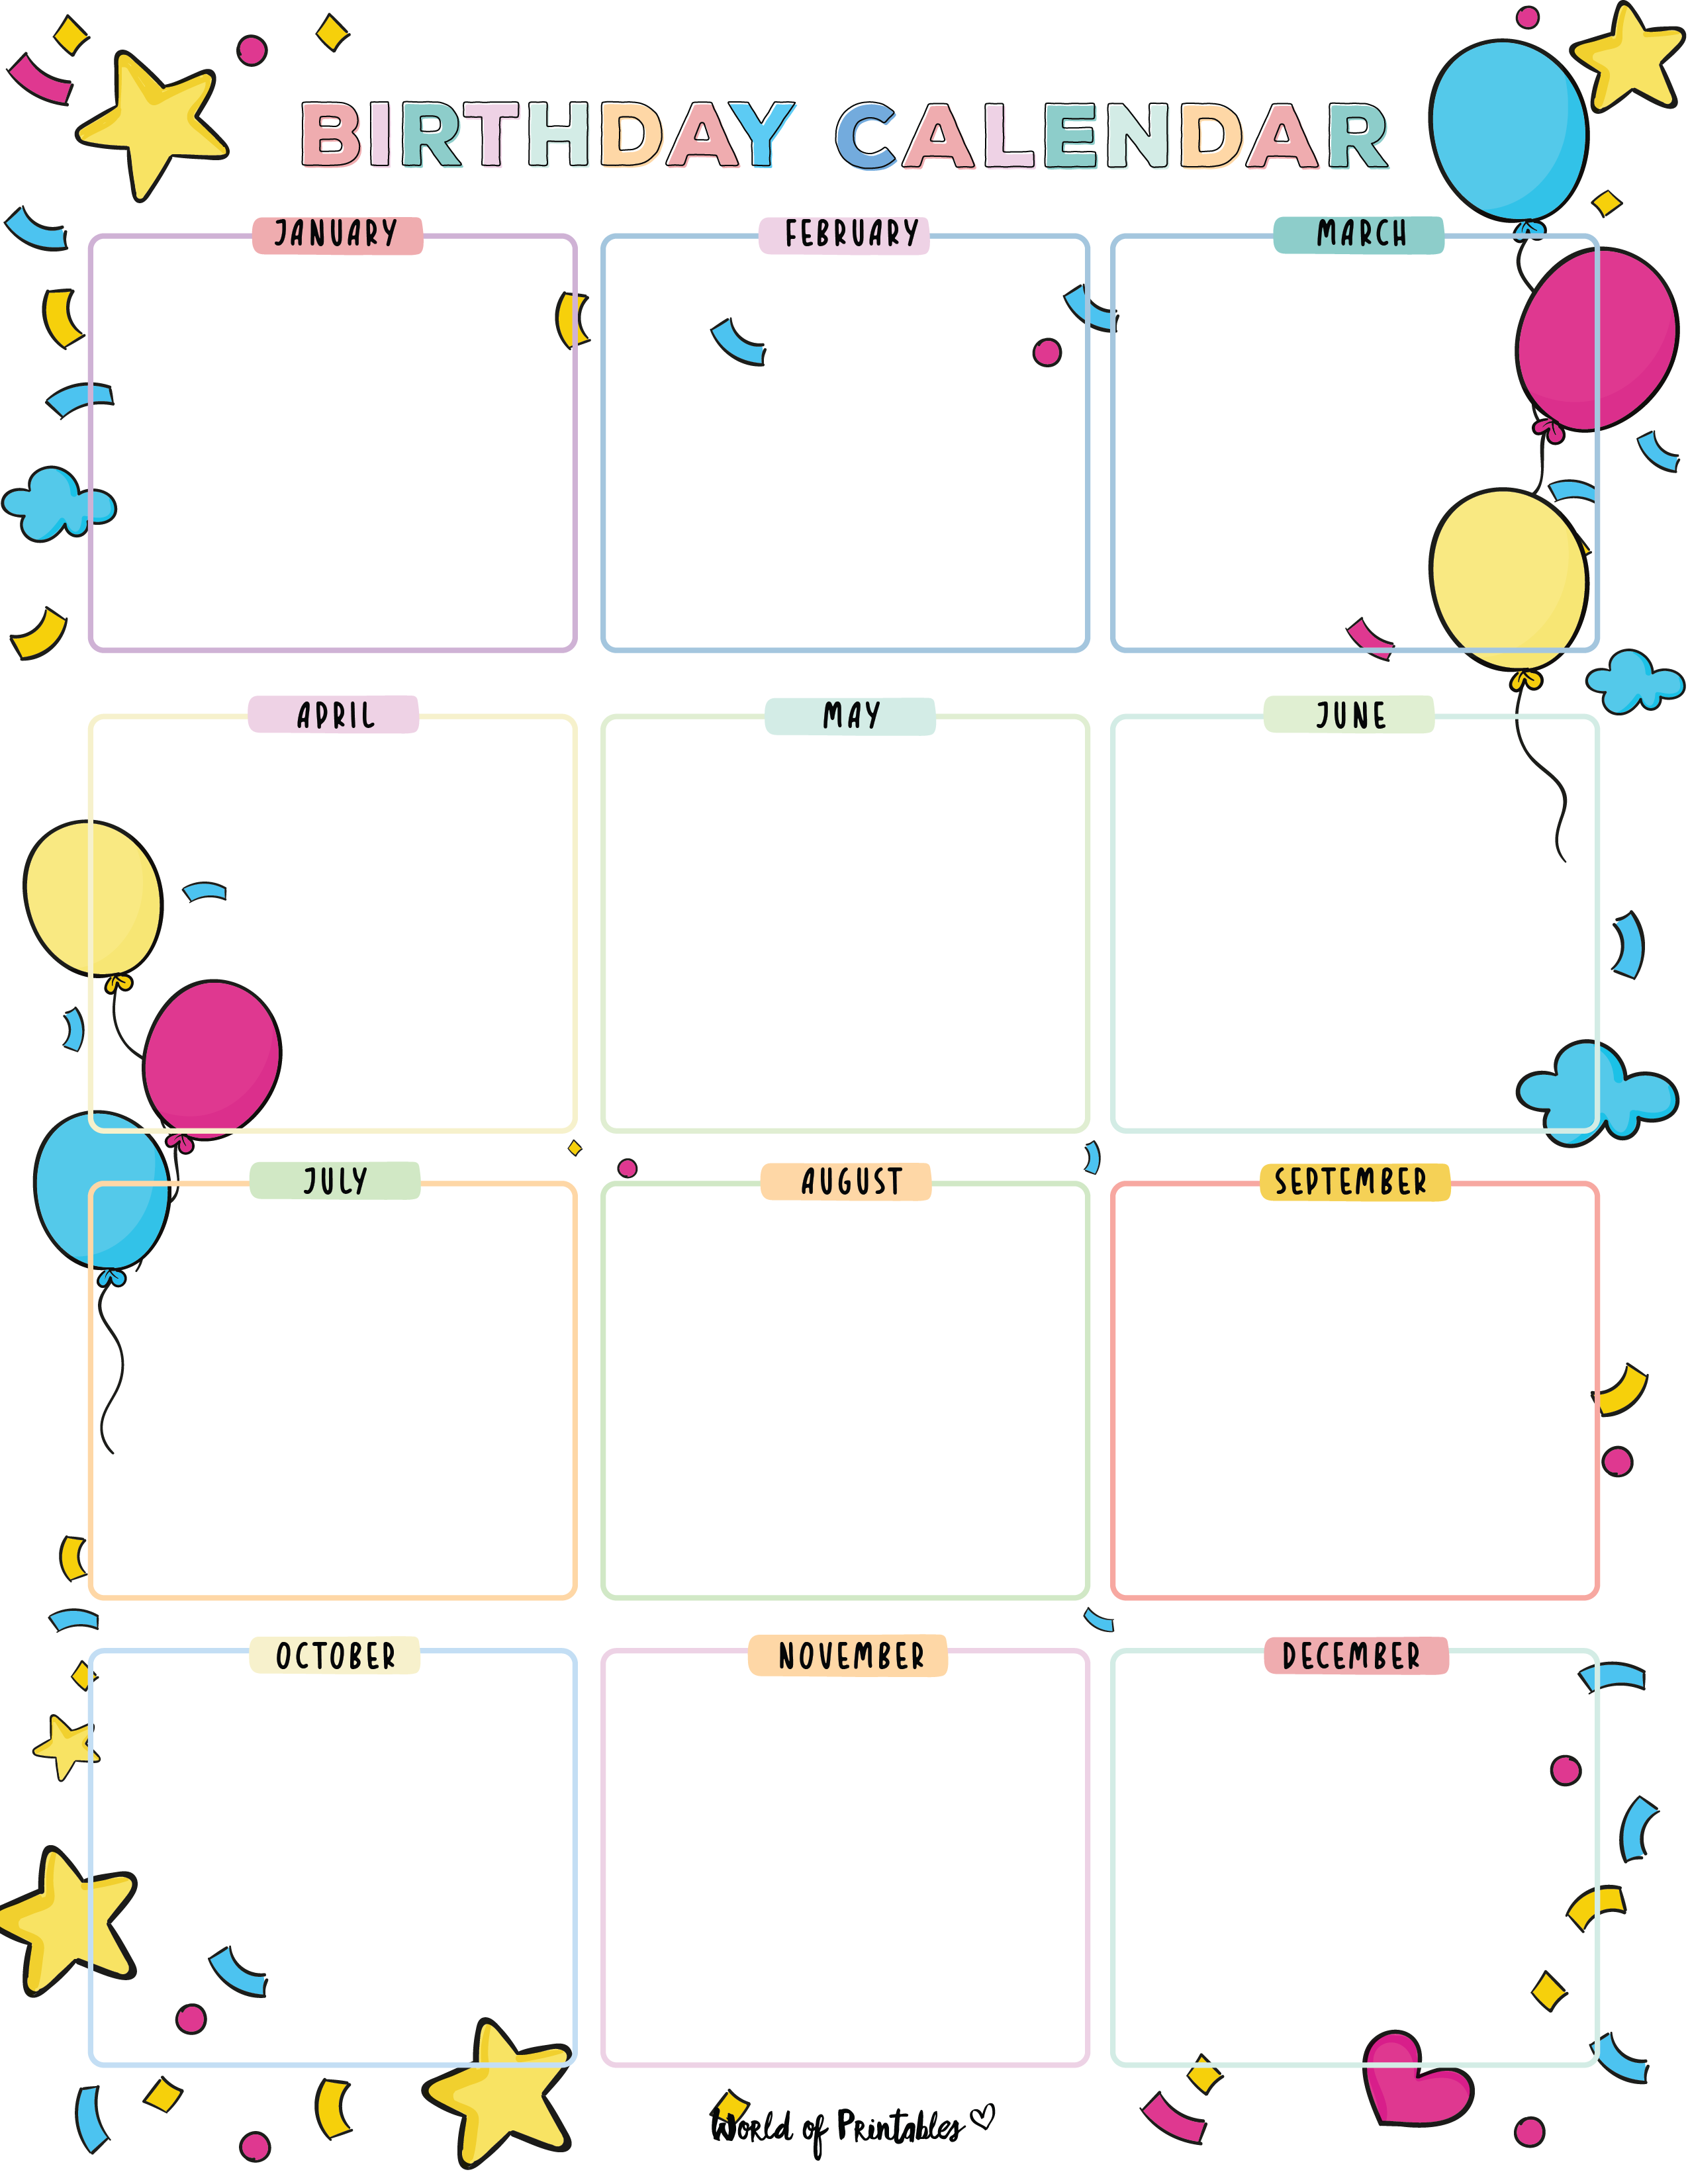 Birthday Calendars - World of Printables